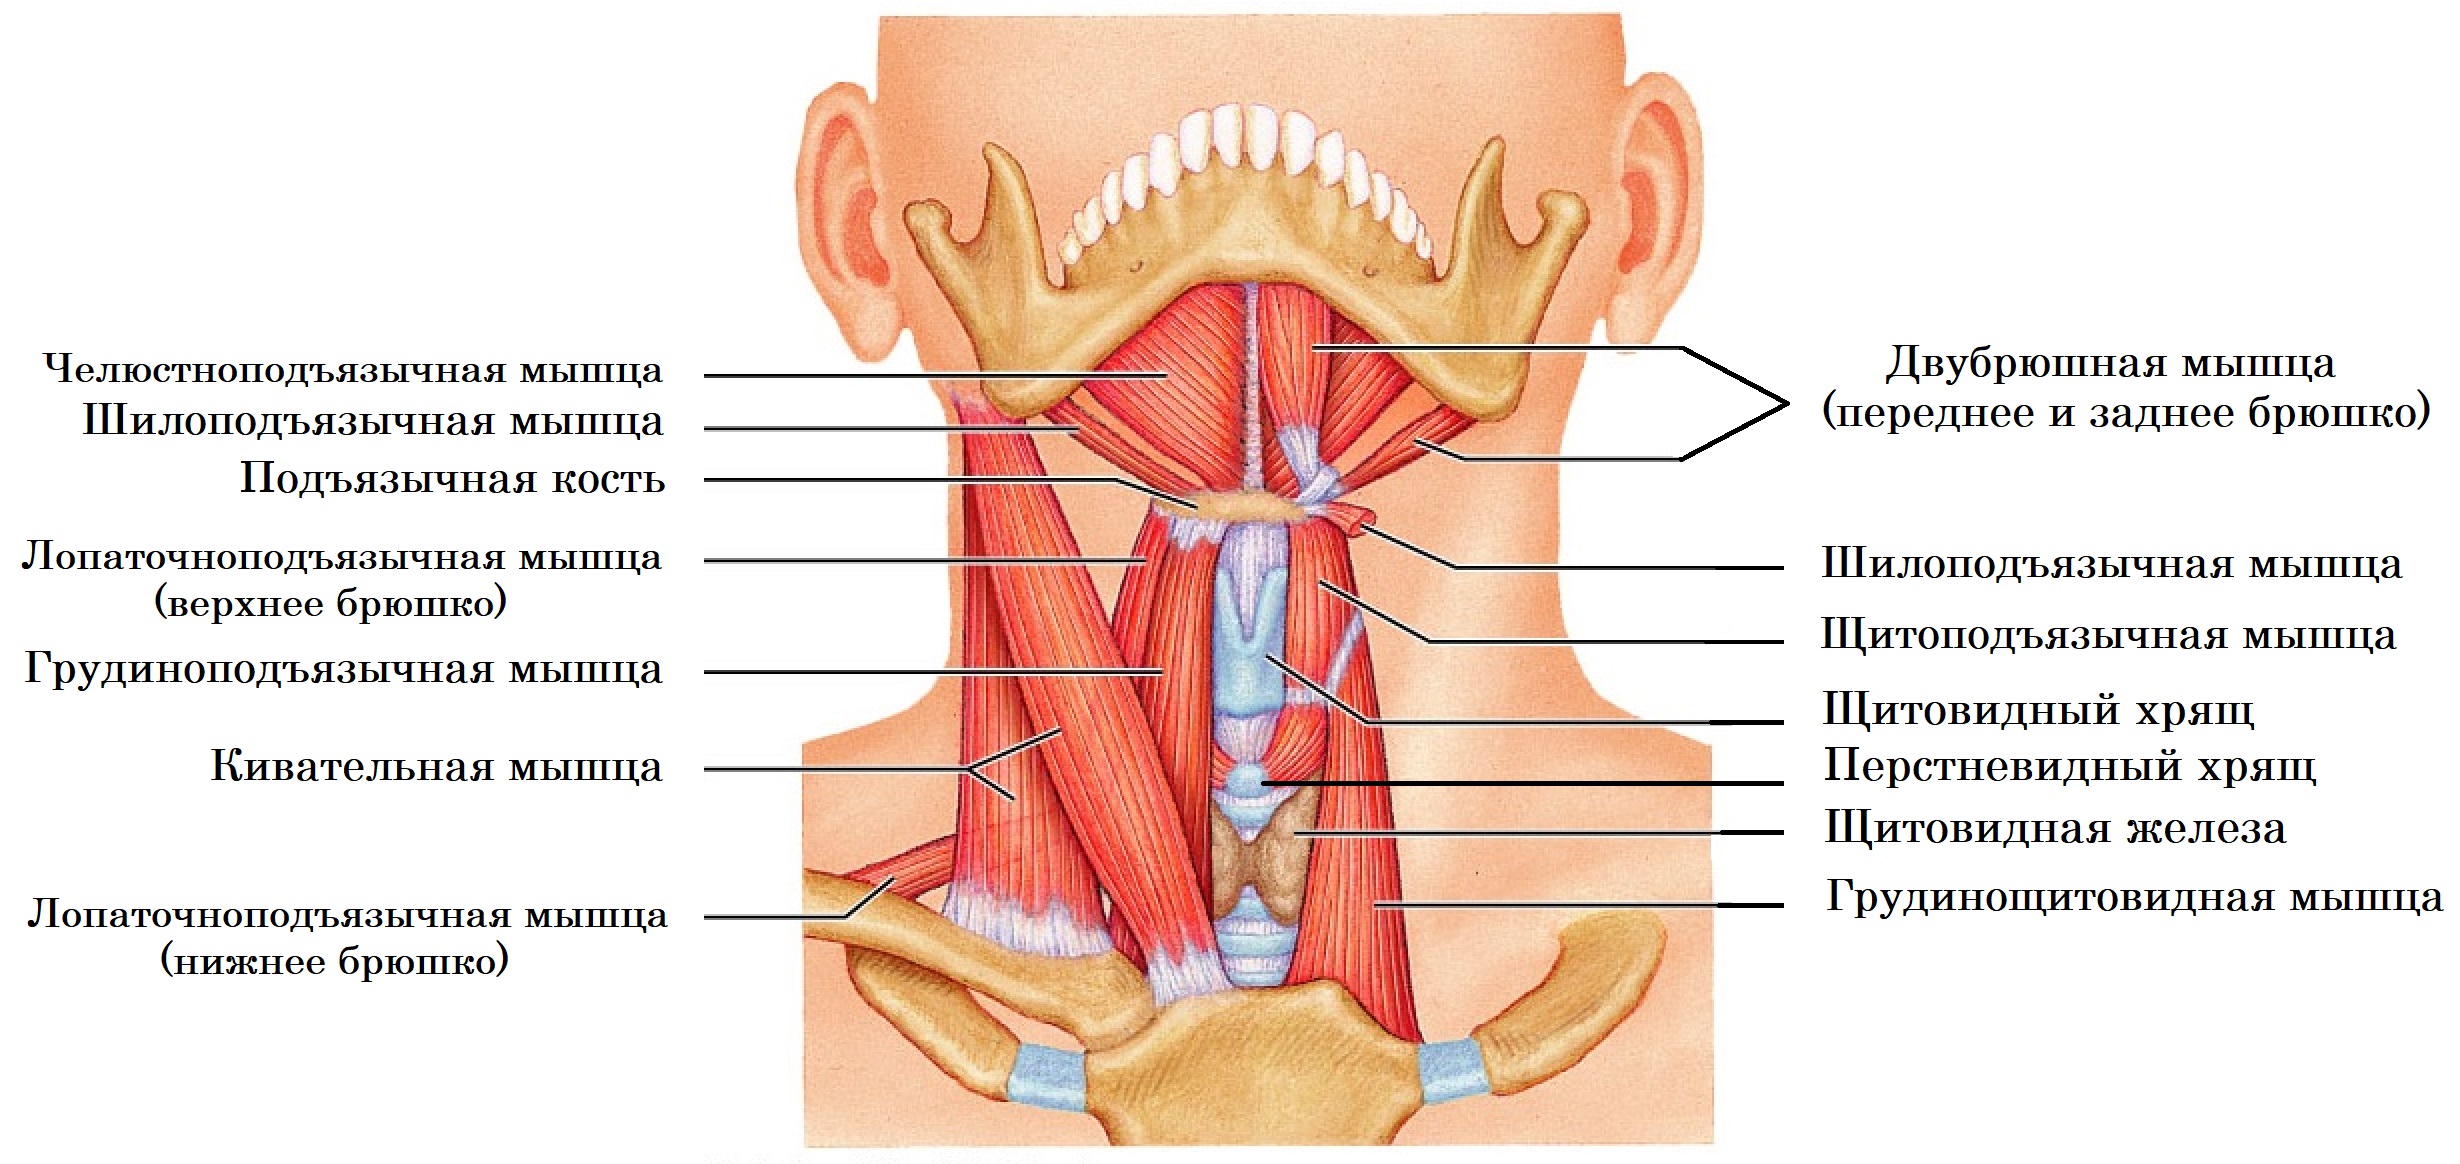 Анатомия щитовидной железы мышцы шеи